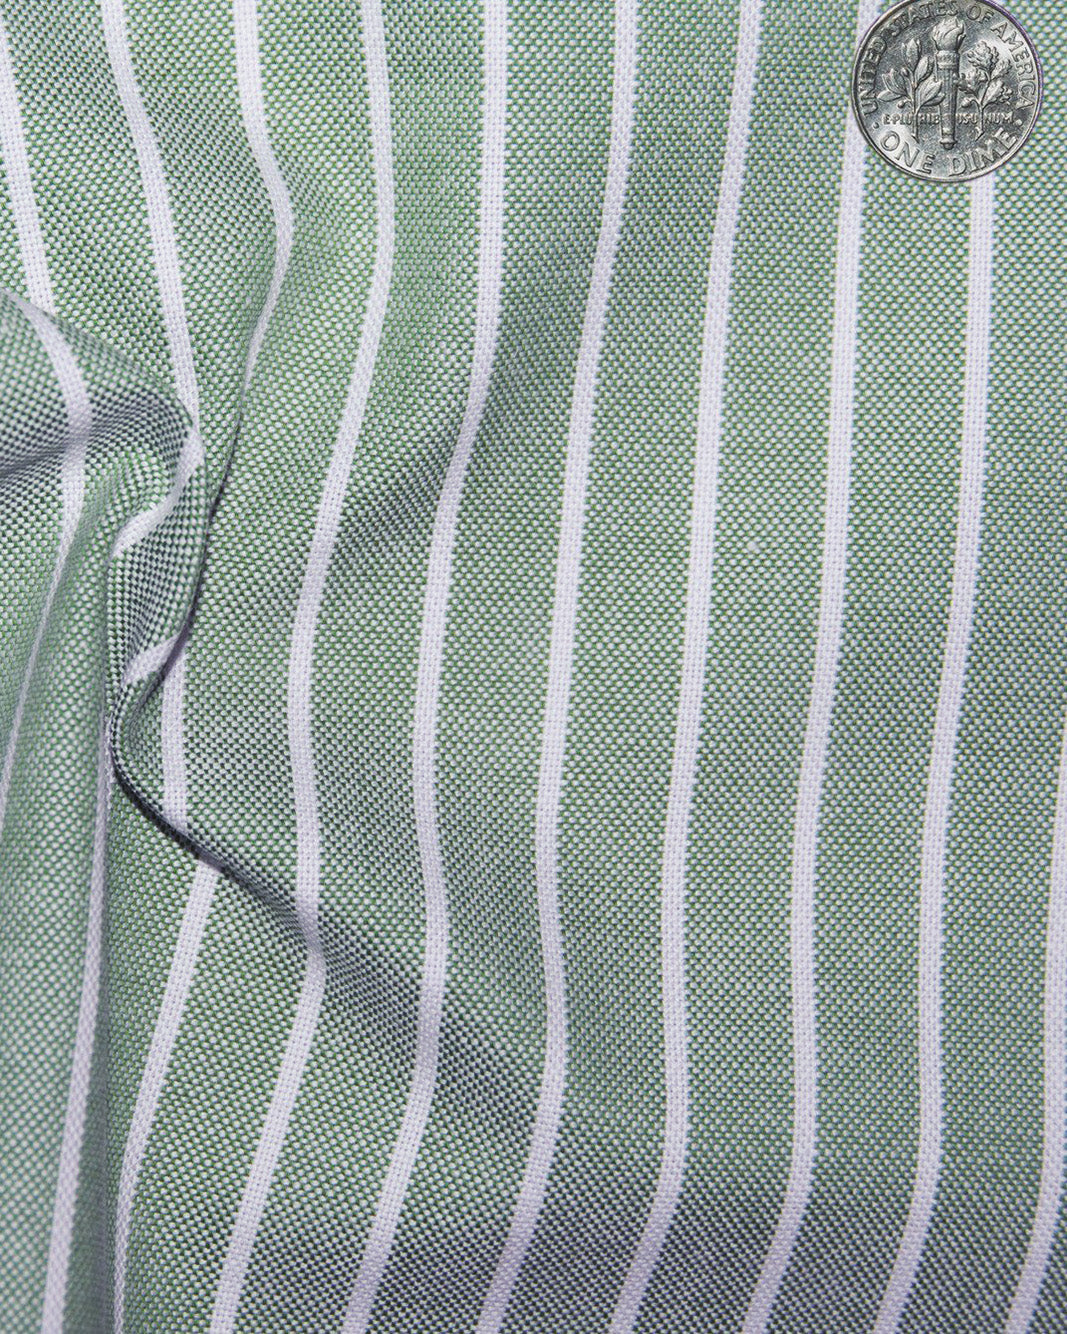 White Stripes On Fern Green Oxford Shirt